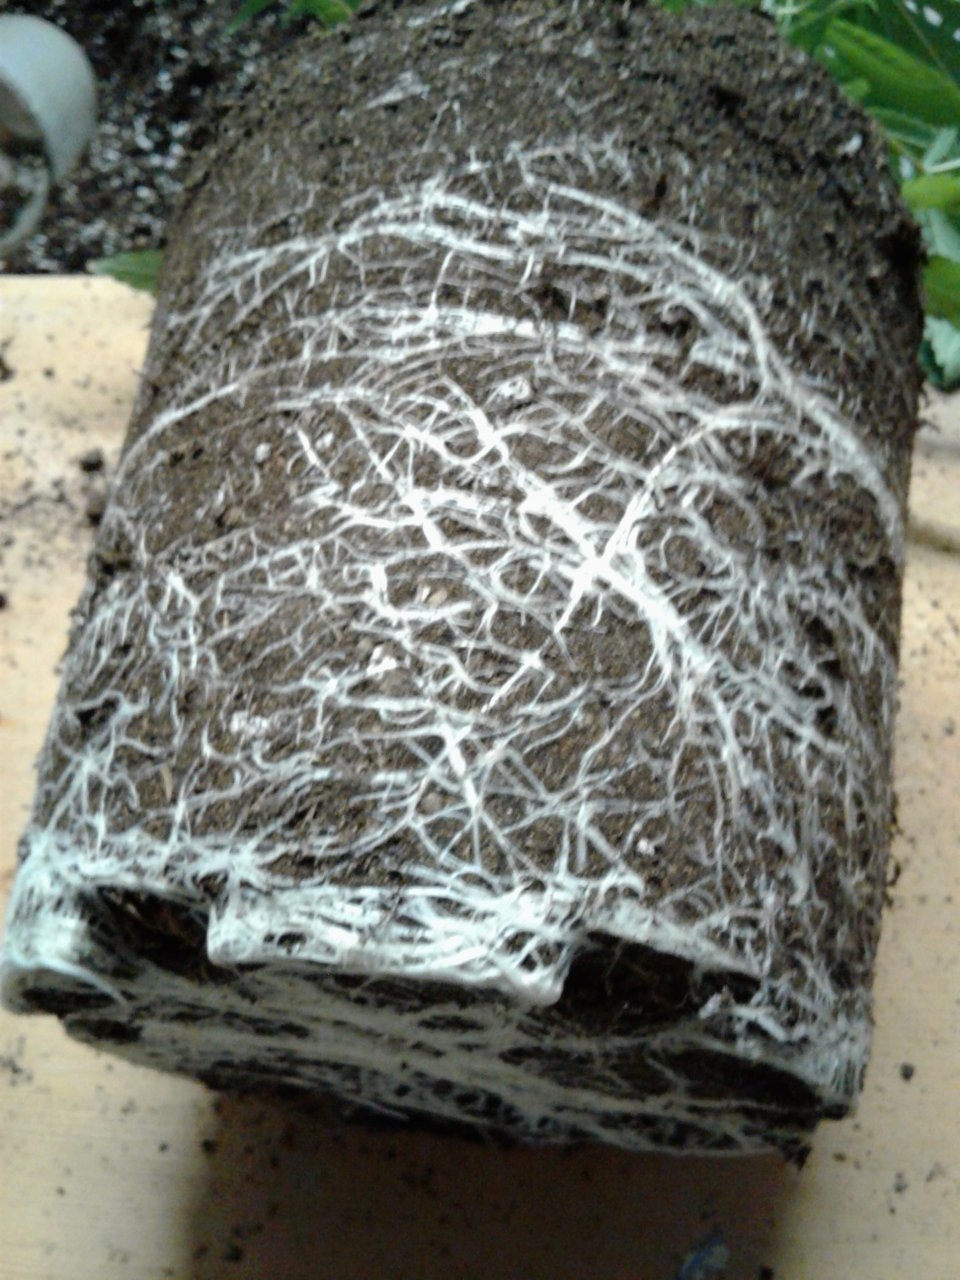 Root bound